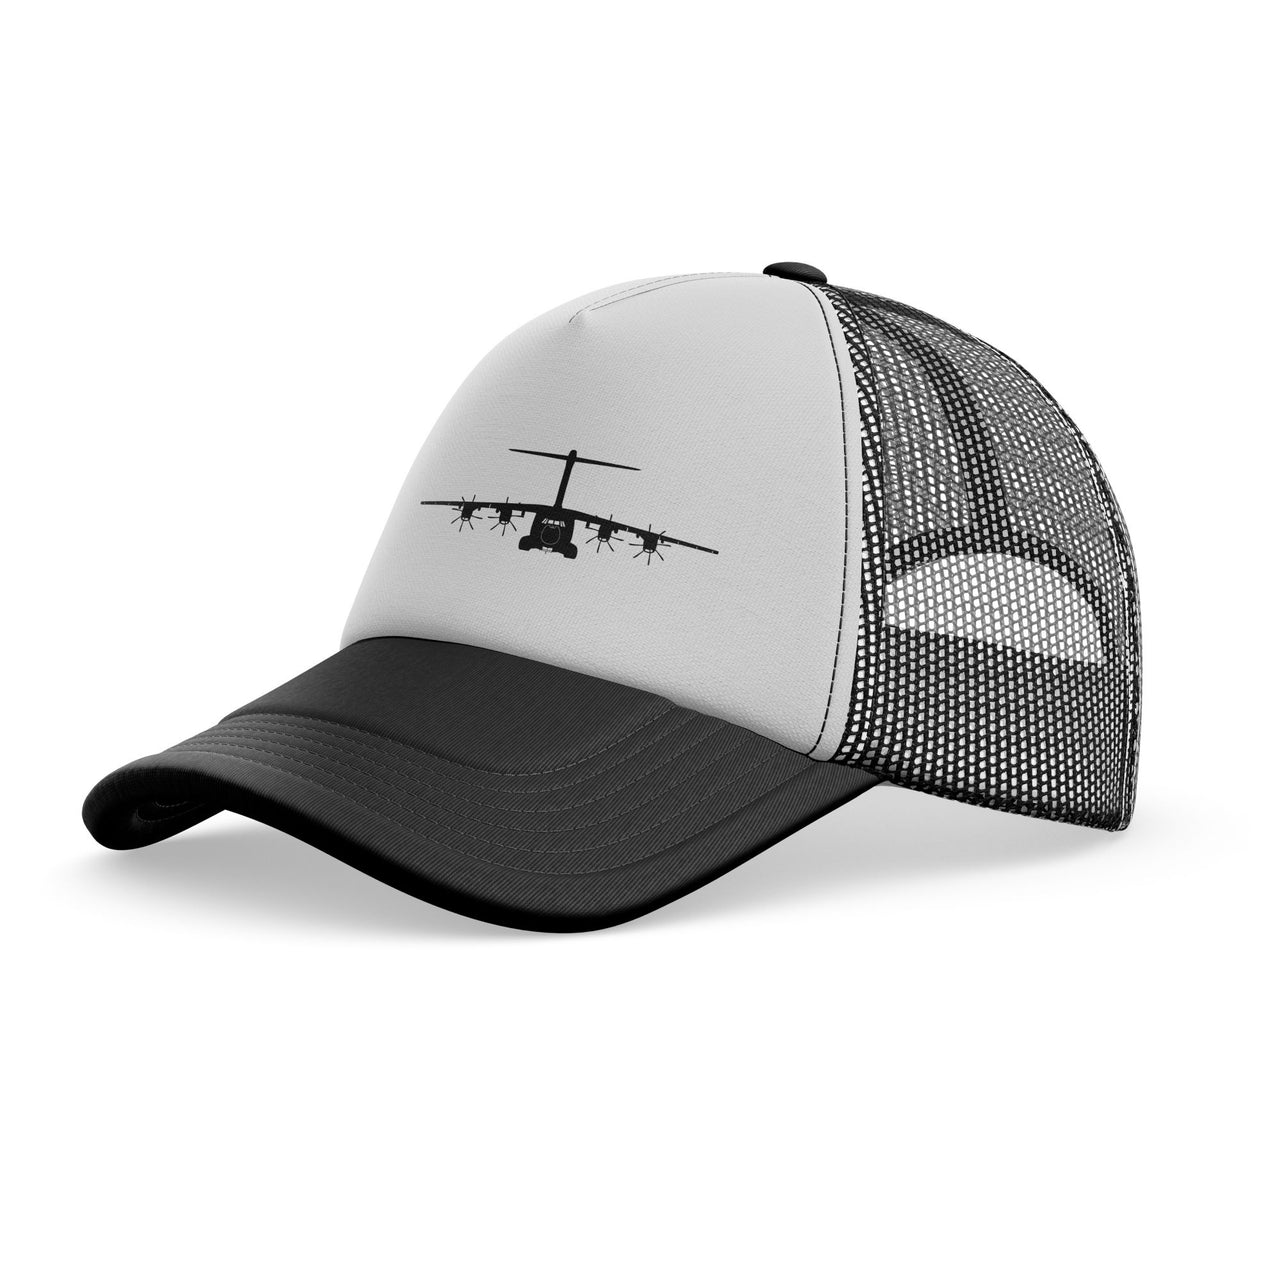 Airbus A400M Silhouette Designed Trucker Caps & Hats